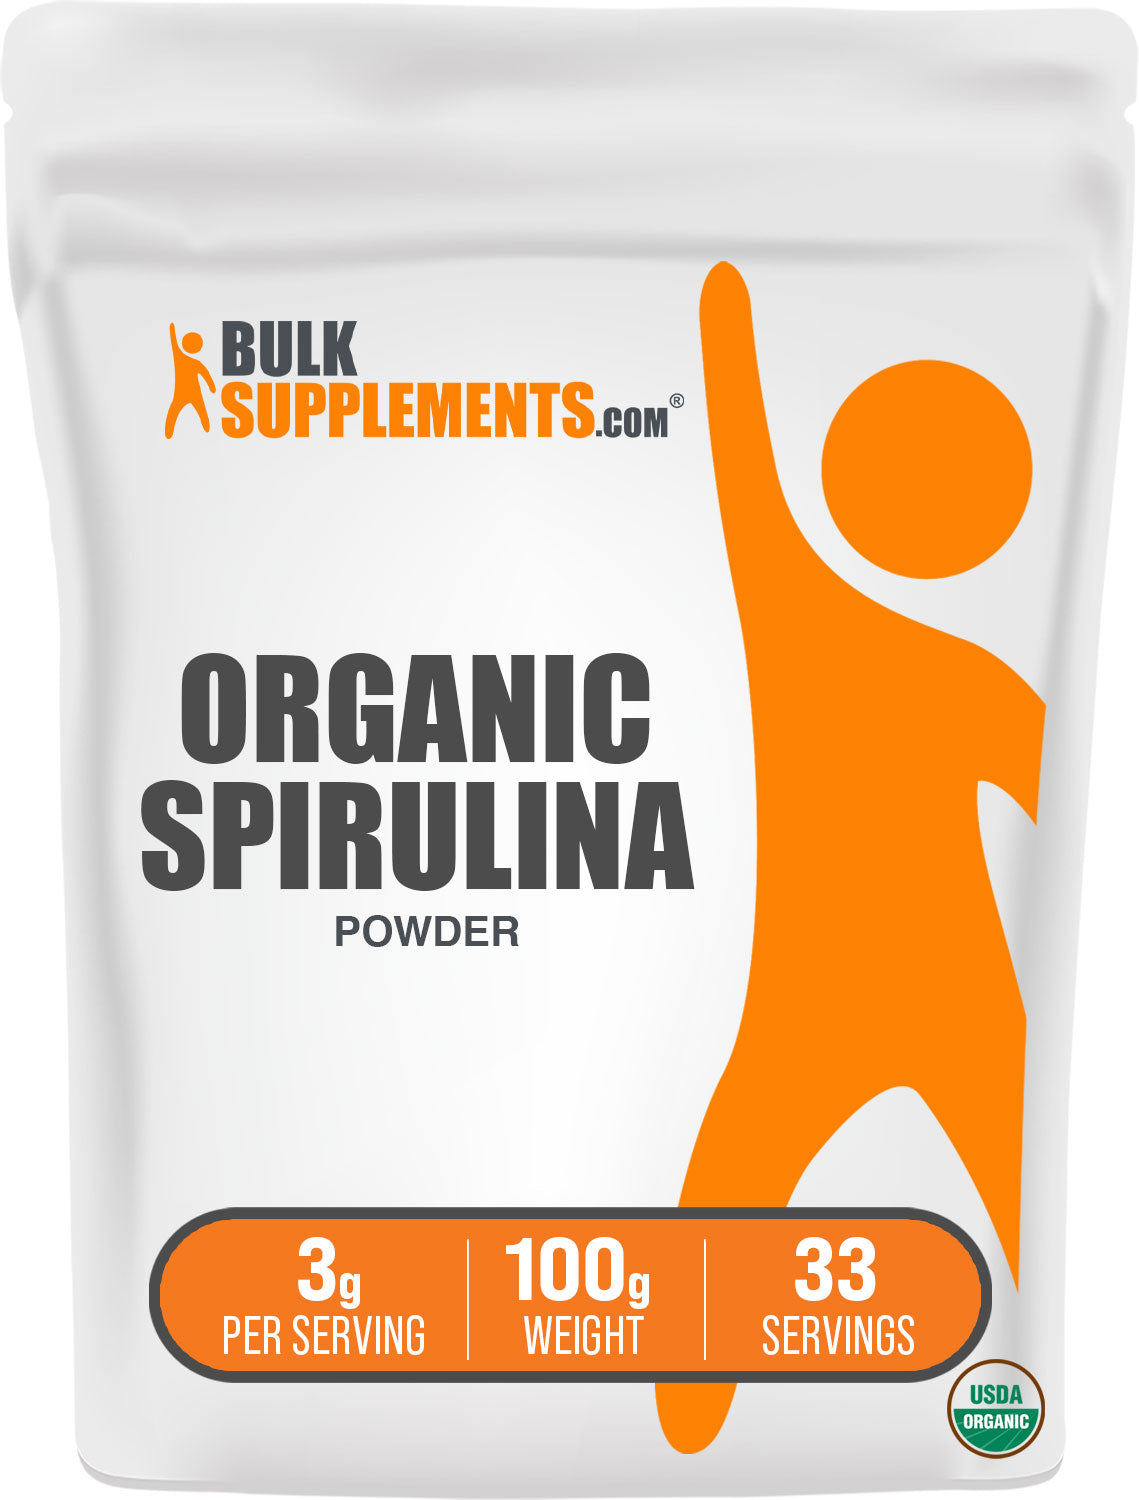 BulkSupplements.com Organic Spirulina Powder 100g Bag